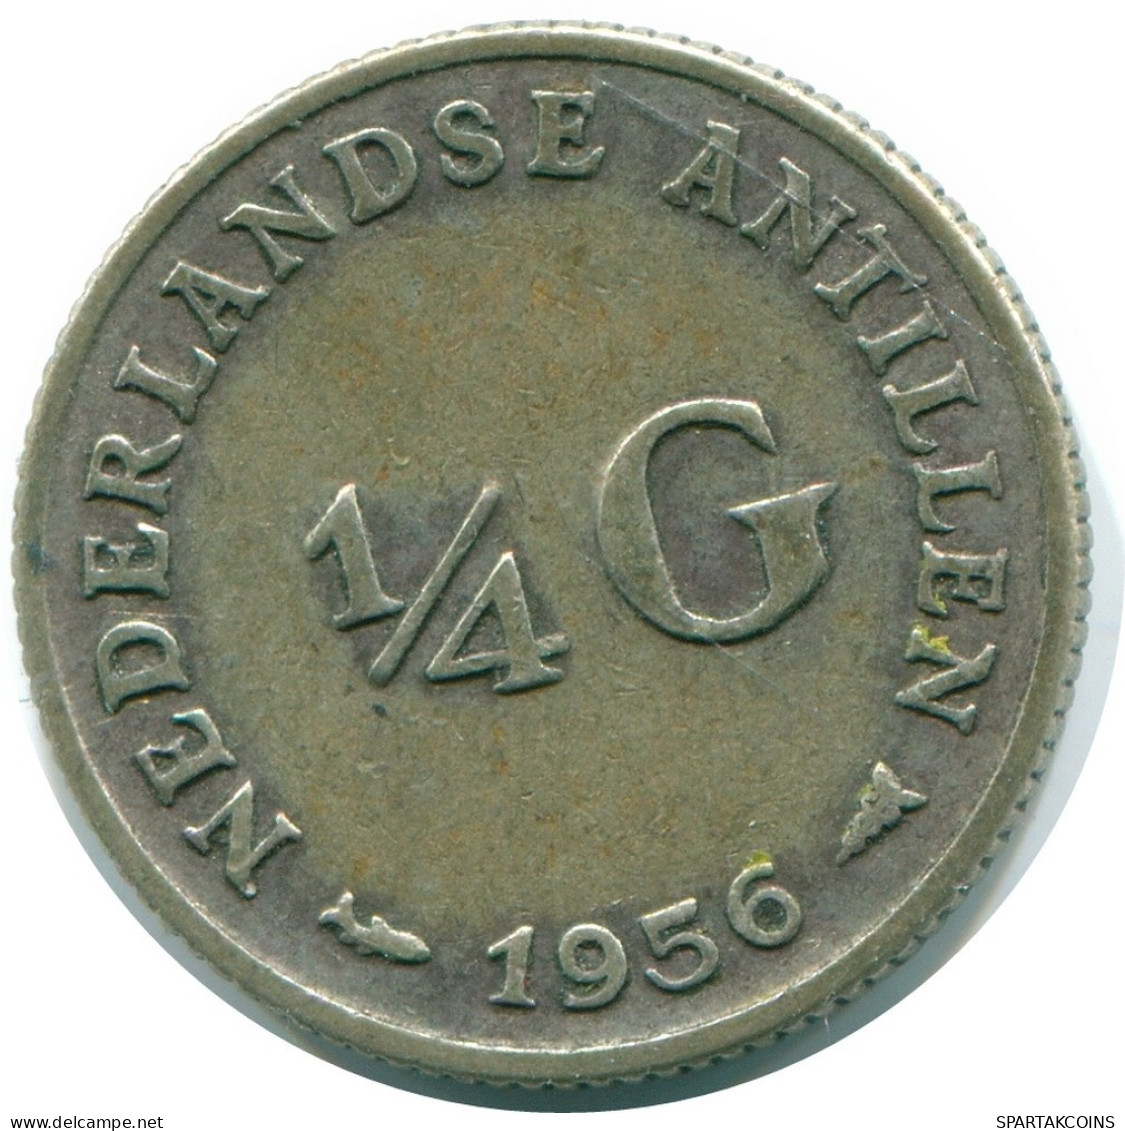 1/4 GULDEN 1956 NETHERLANDS ANTILLES SILVER Colonial Coin #NL10968.4.U.A - Netherlands Antilles